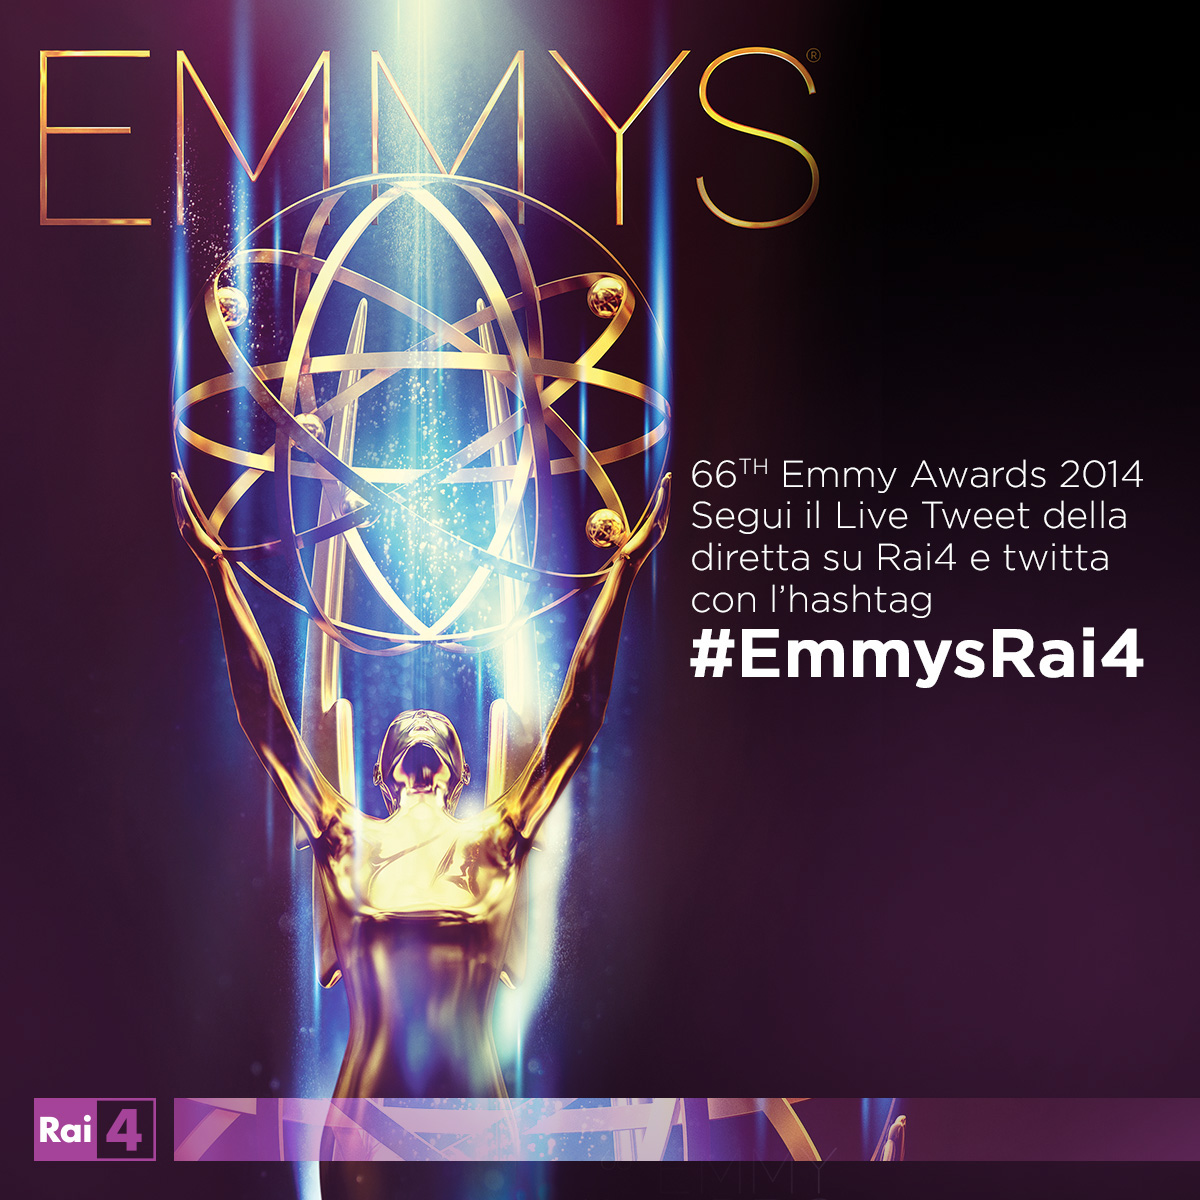 emmy Awards 66Th Emmy Awards emmys rai LCF Promotion Design social network media manager social manager